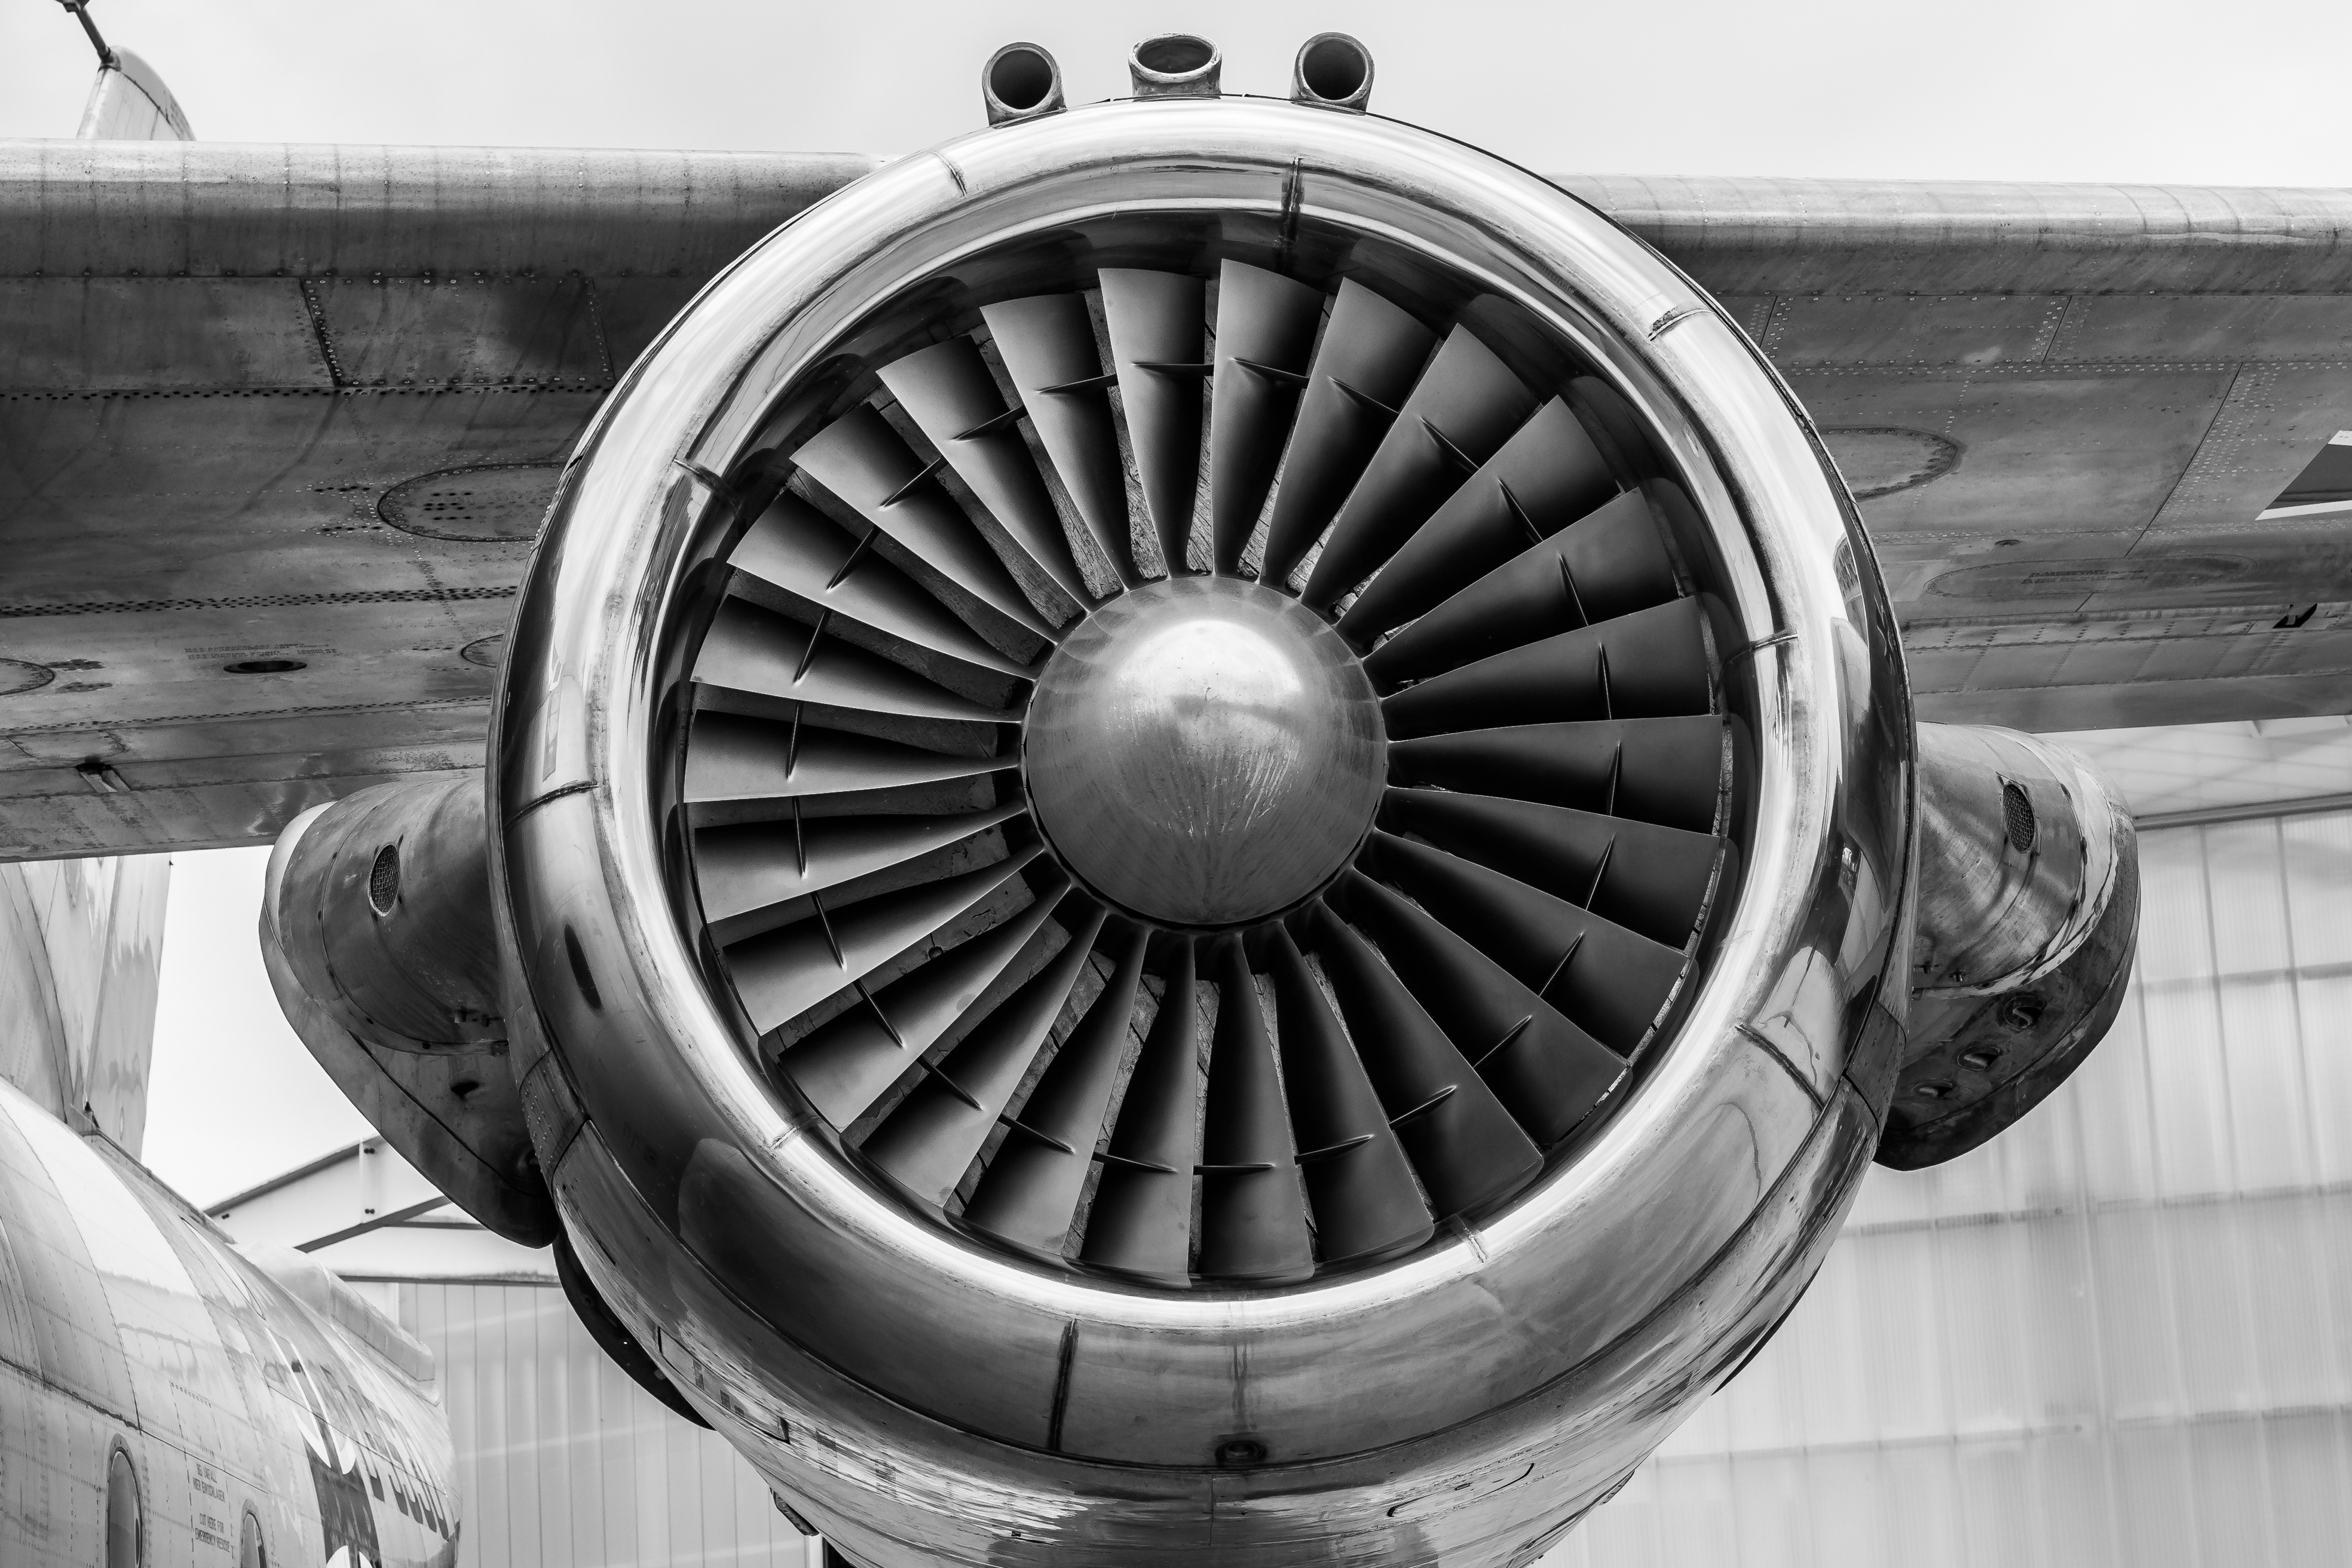 aeroplane engine in black and white